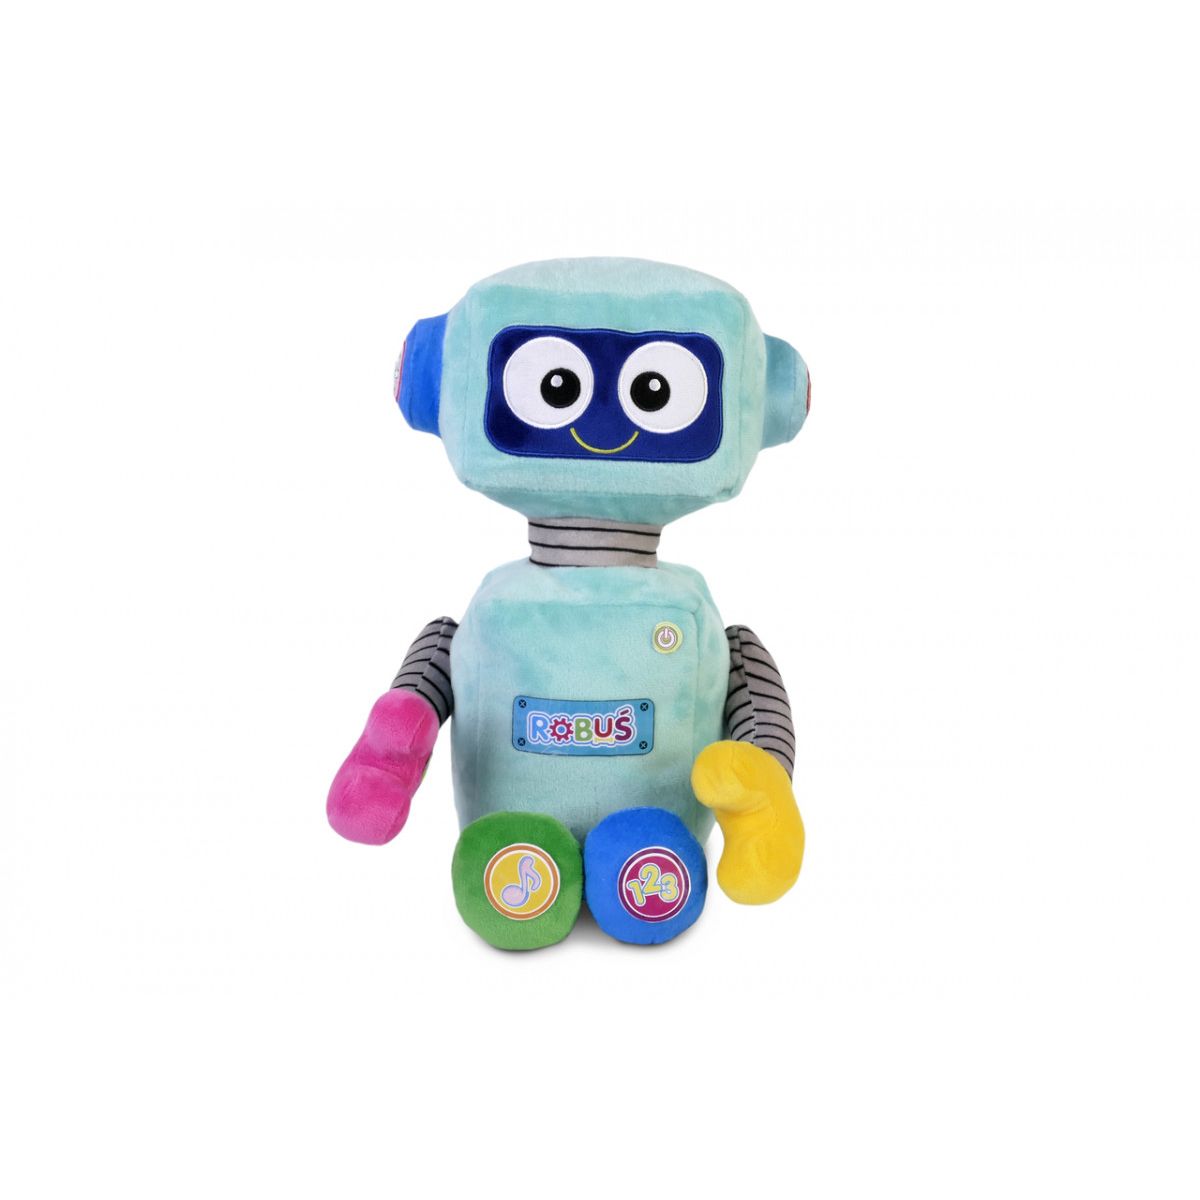 Pluszak interaktywny robot Robuś Artyk (128394)